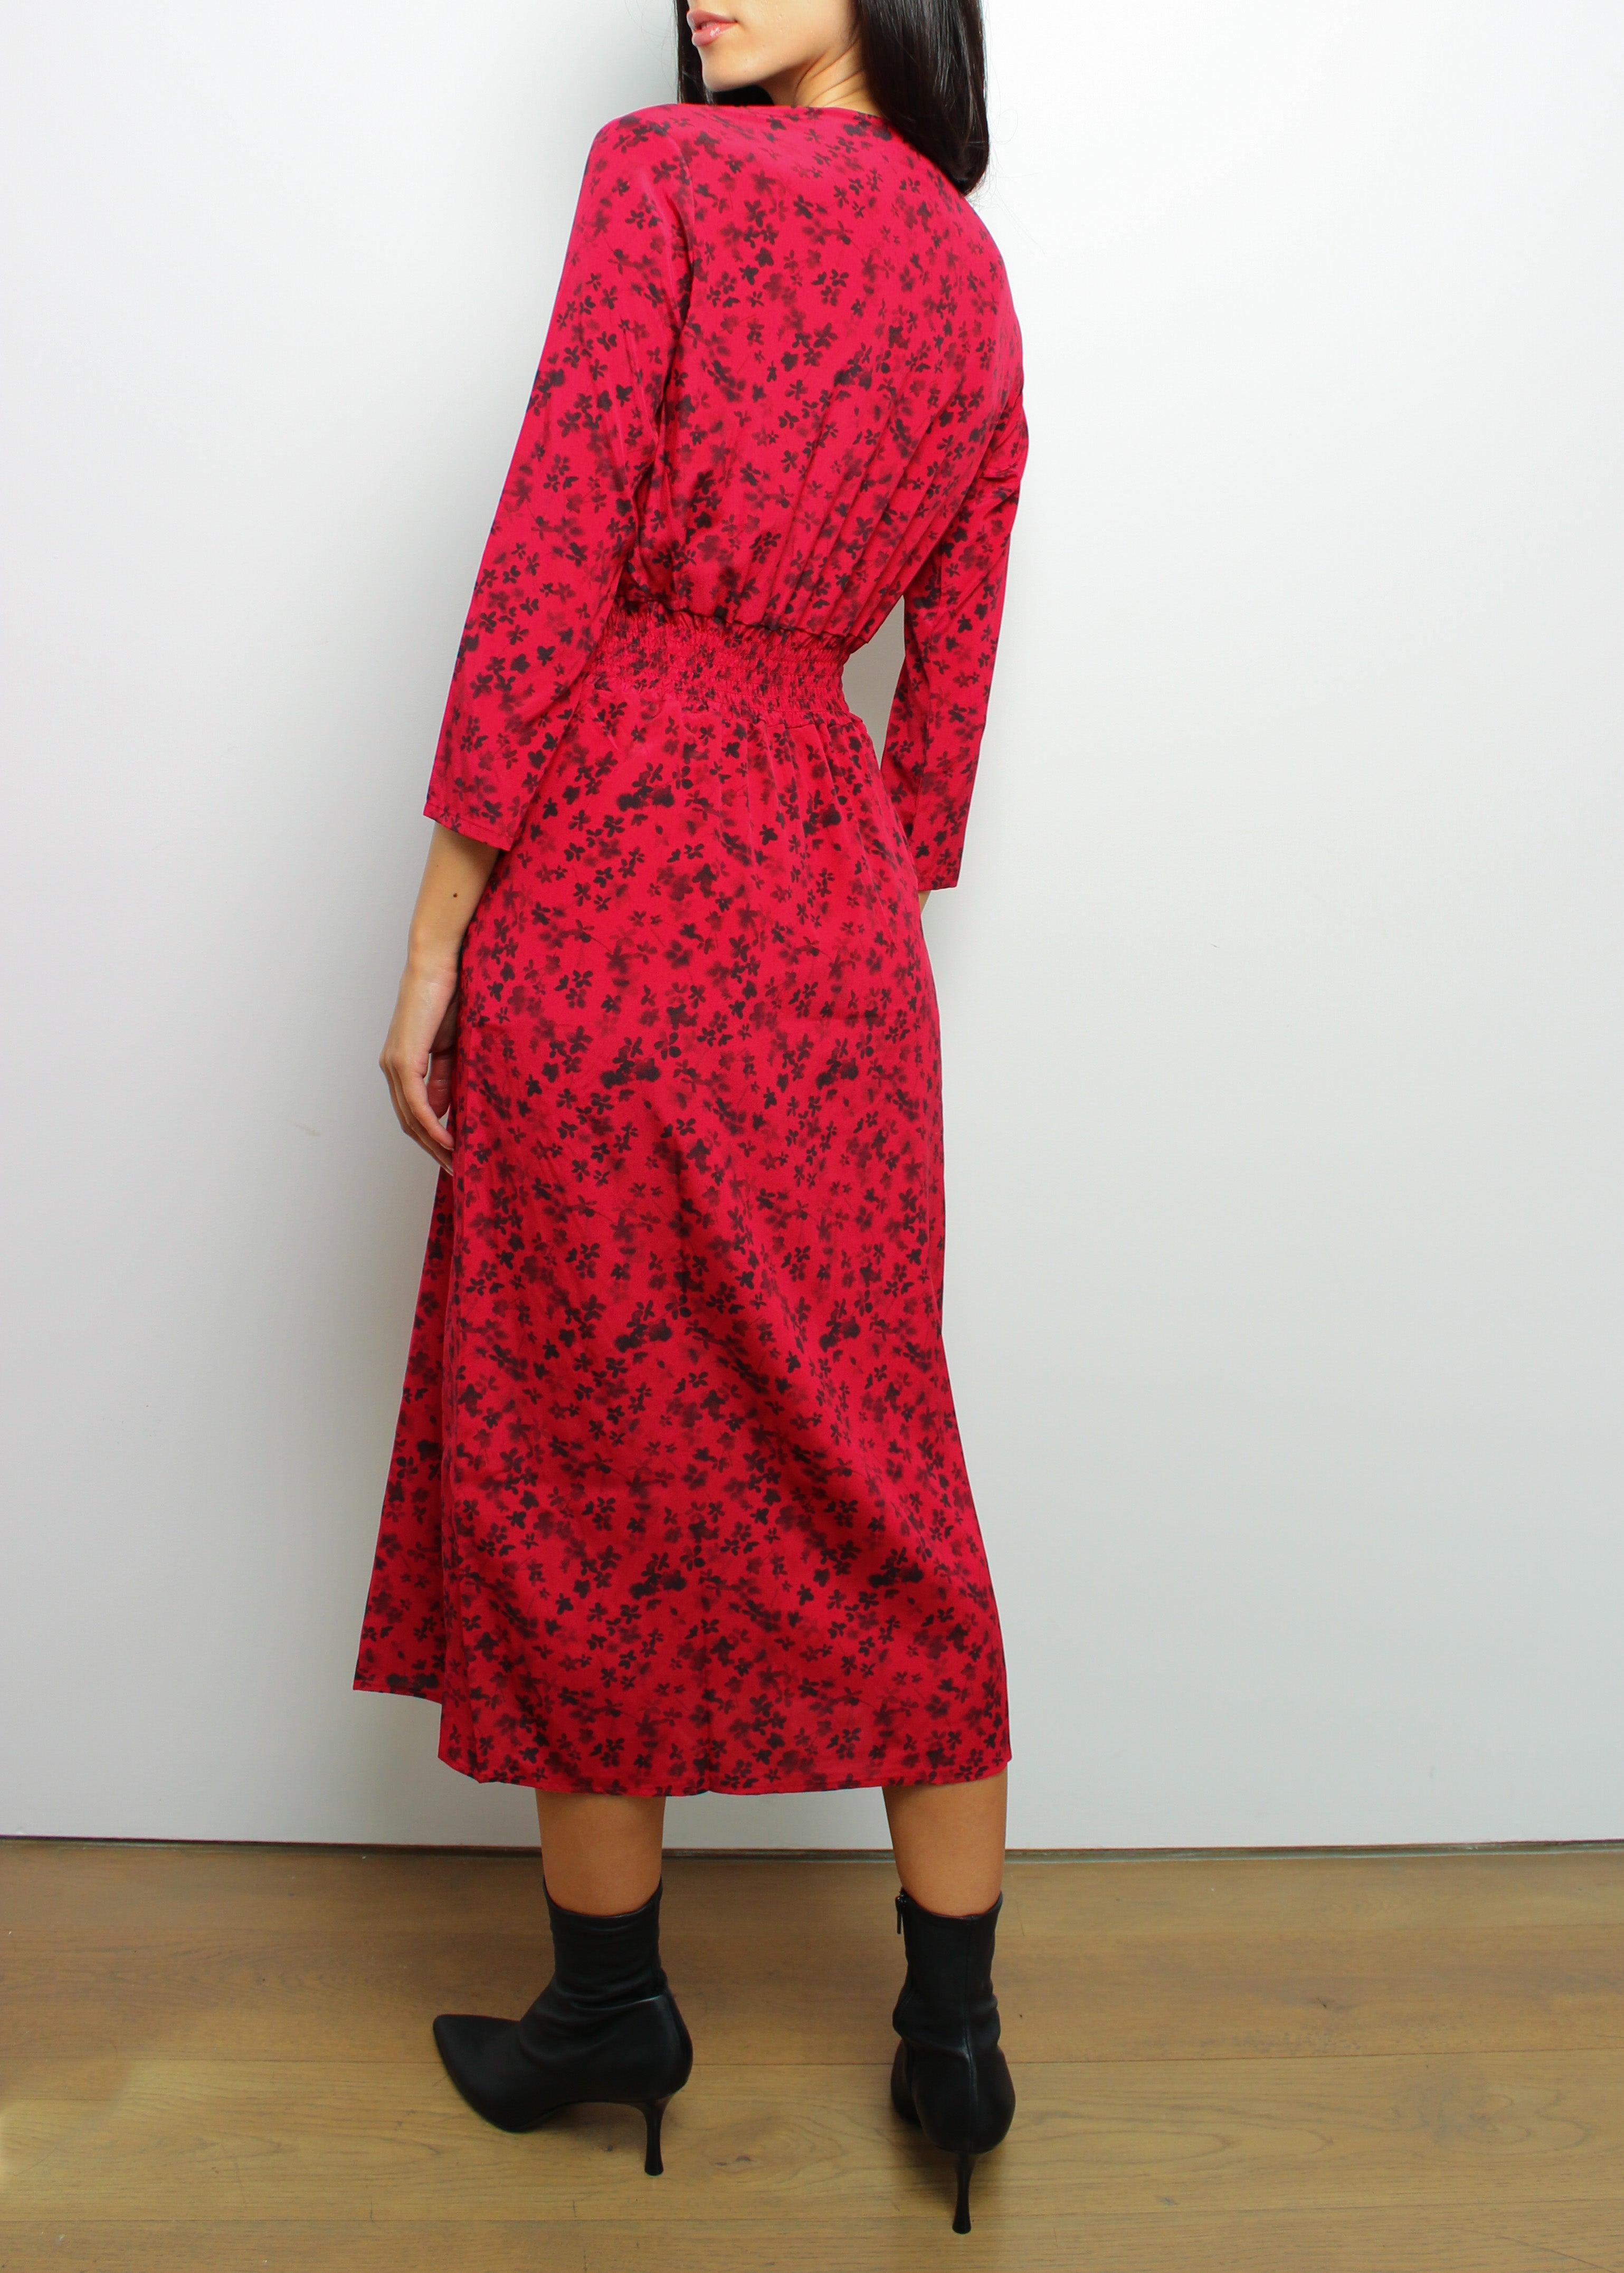 PPL Tiffany Dress in Flower Shadows 01 Russett Red